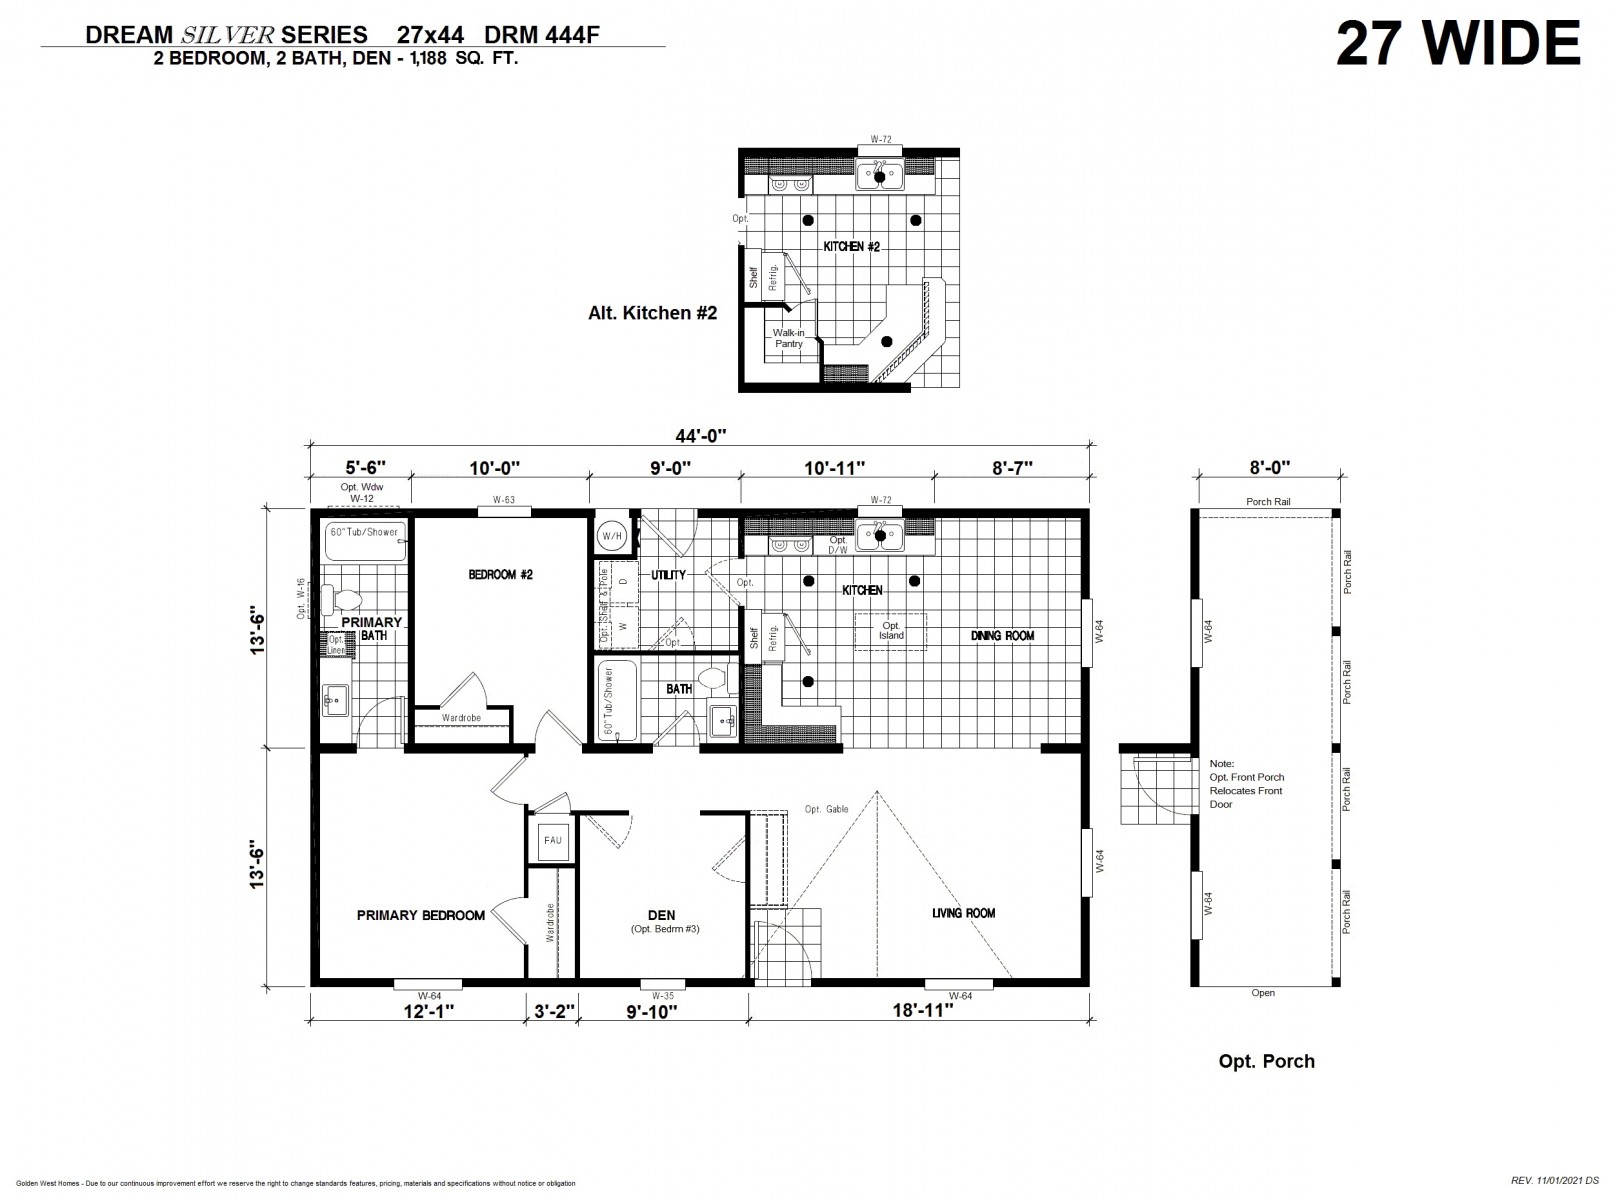 Homes Direct Modular Homes - Model DRM444F - Floorplan